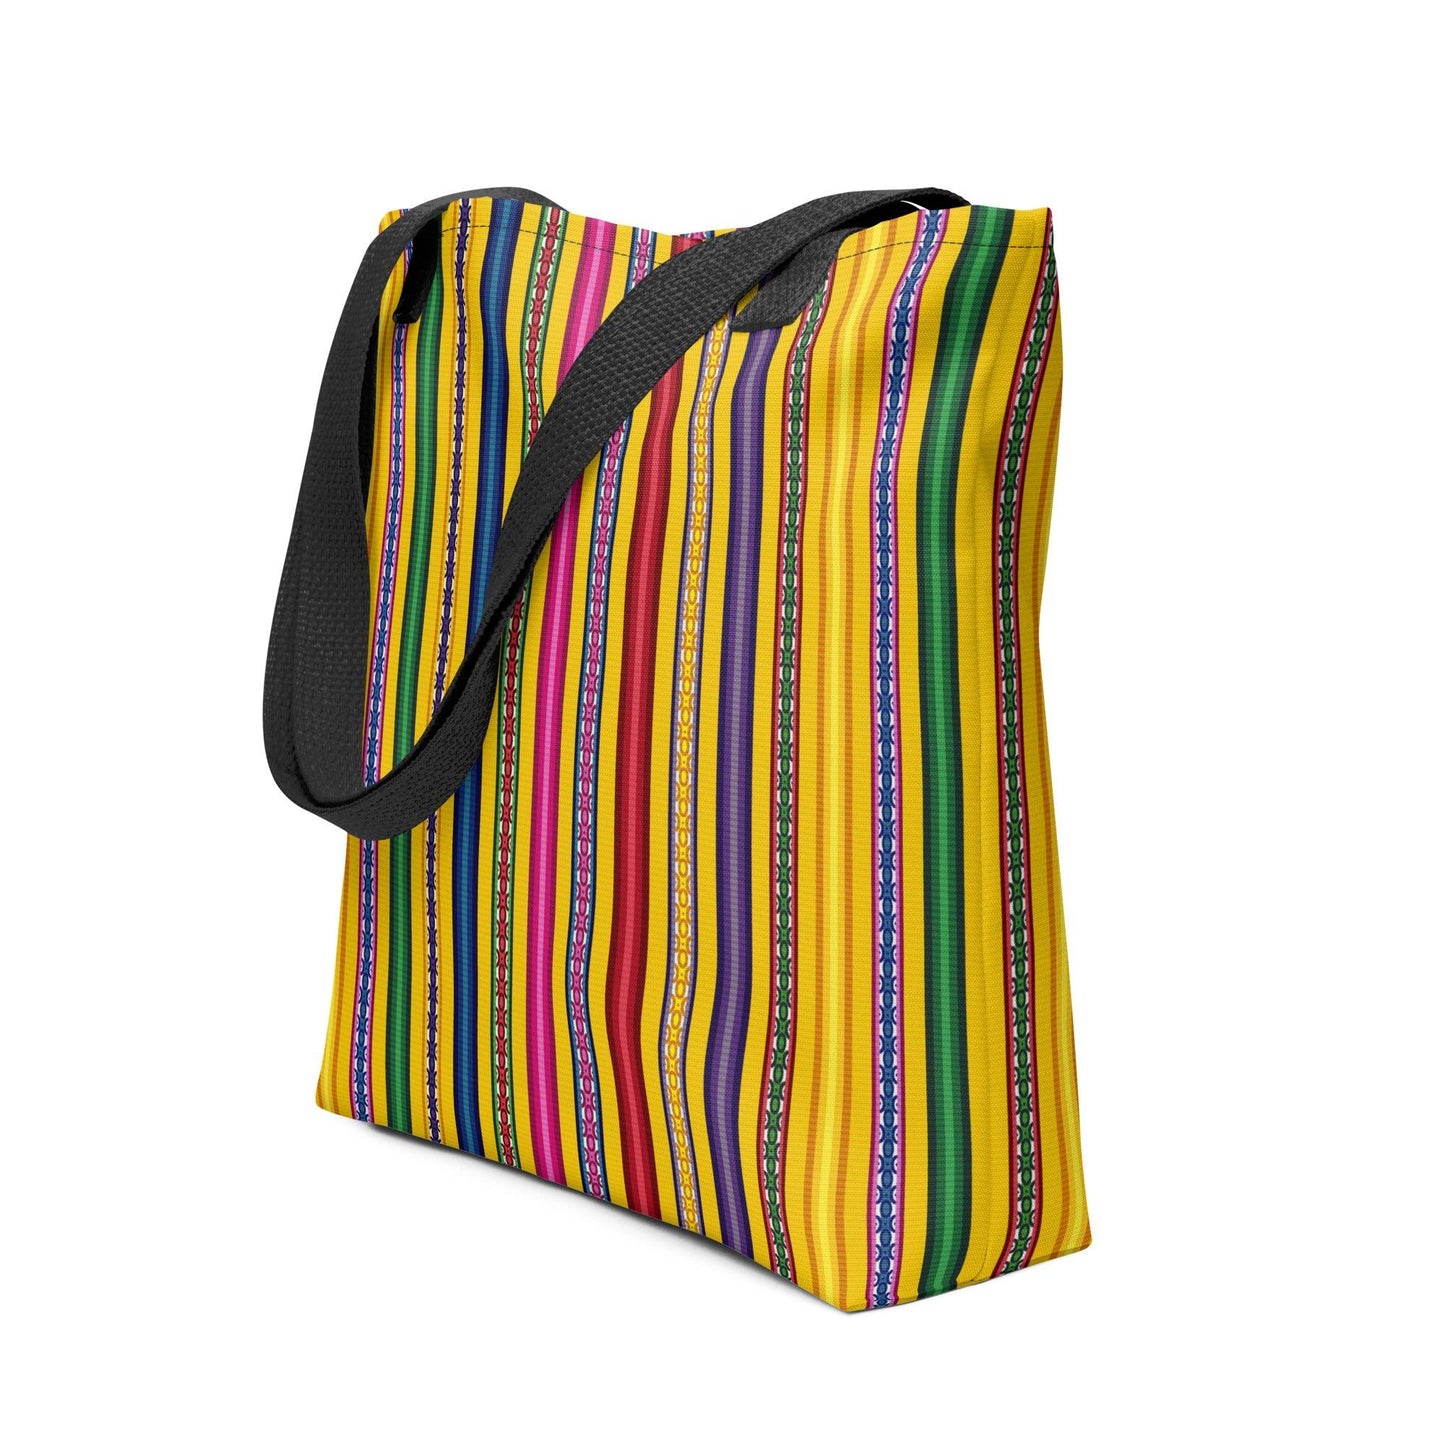 Peruvian Blanket Print Tote Bag - The Global Wanderer